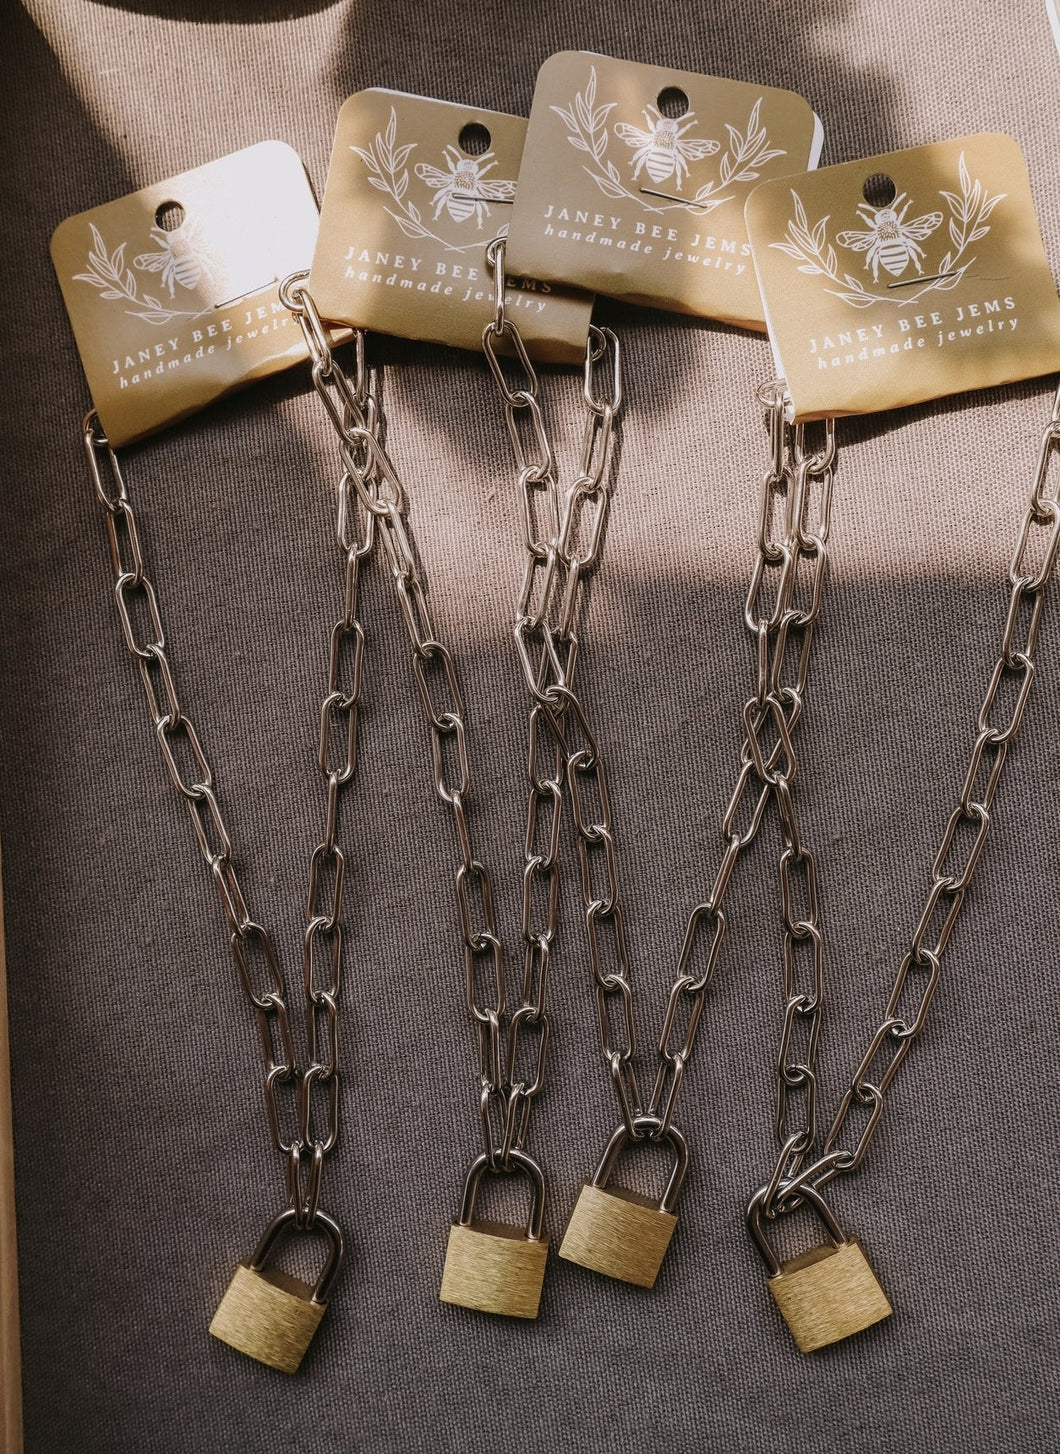 Chain Lock Necklace